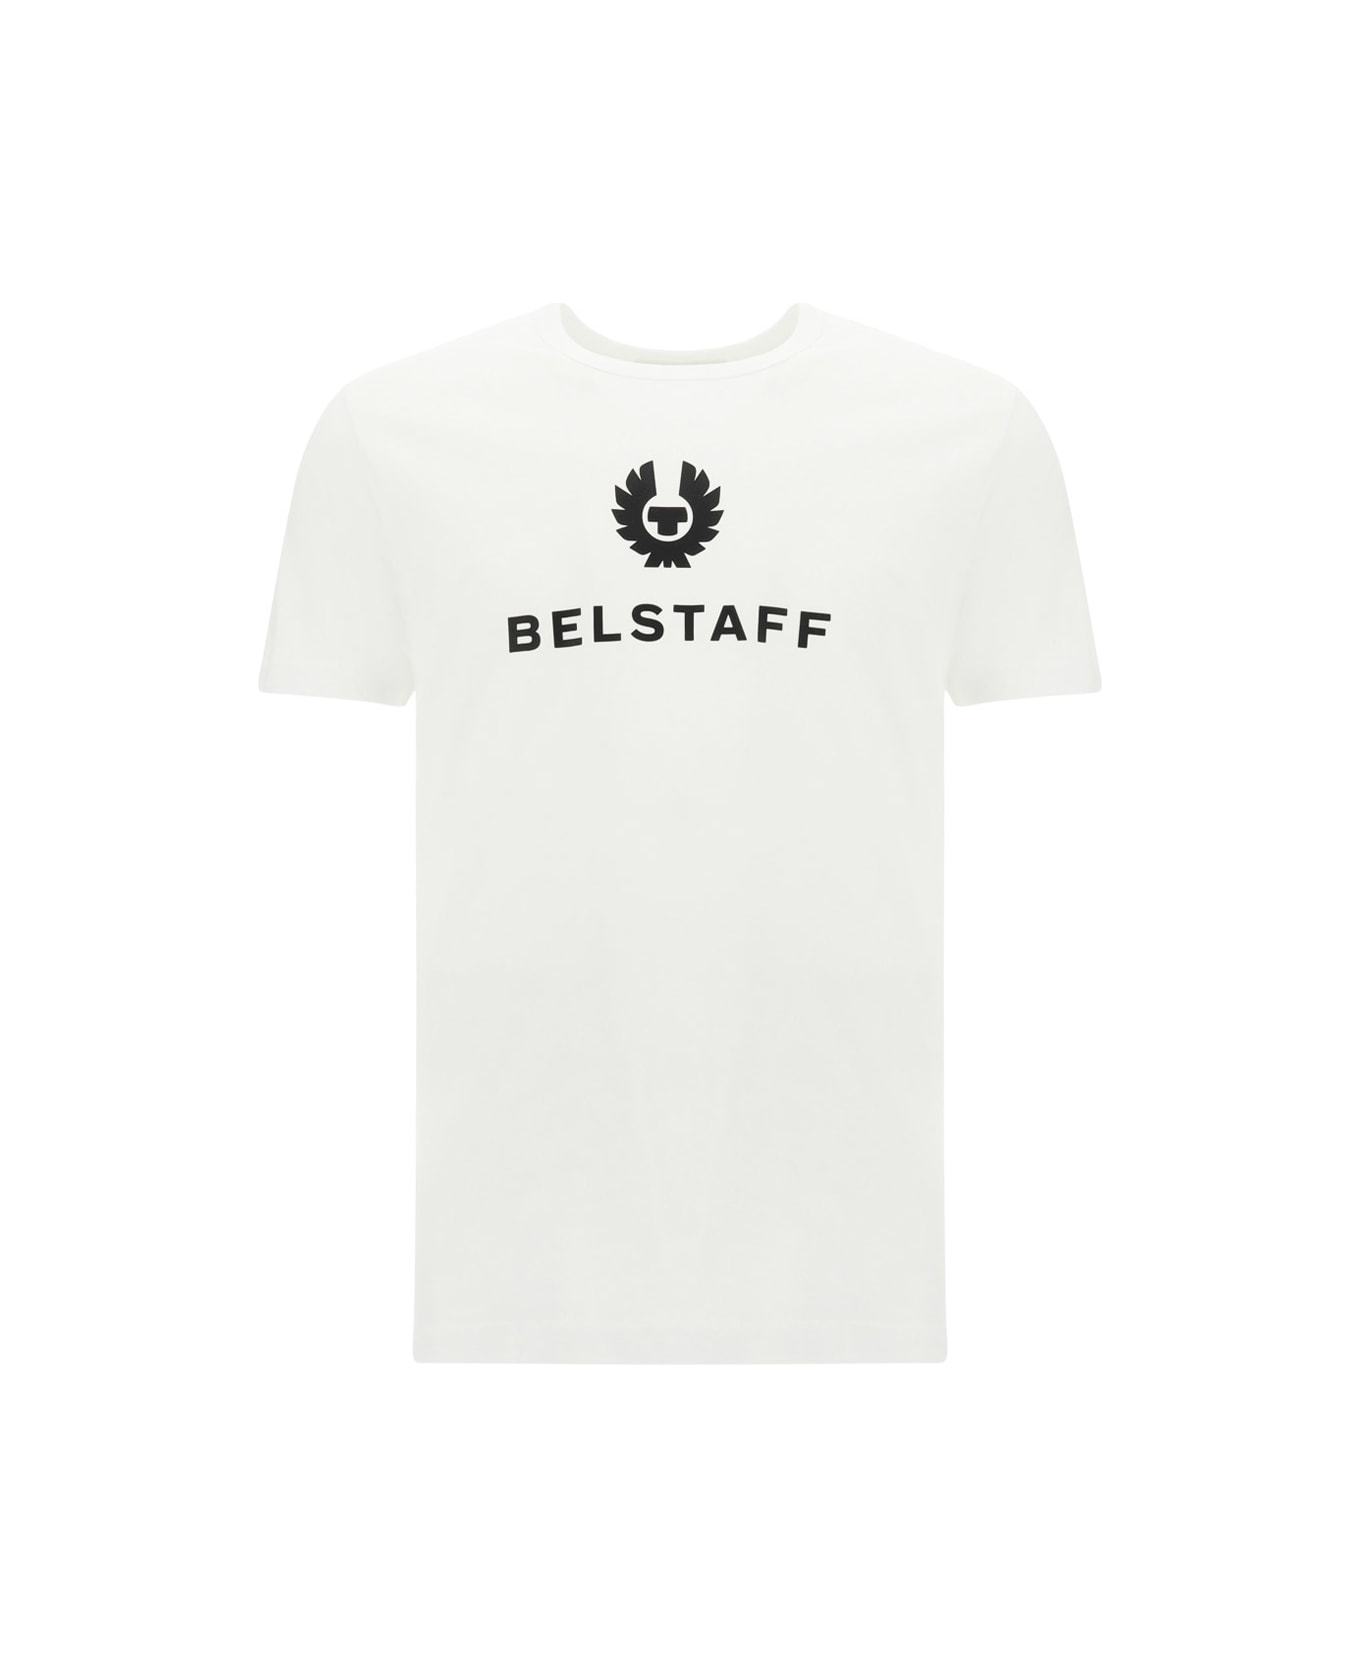 Belstaff Signature T-shirt - White